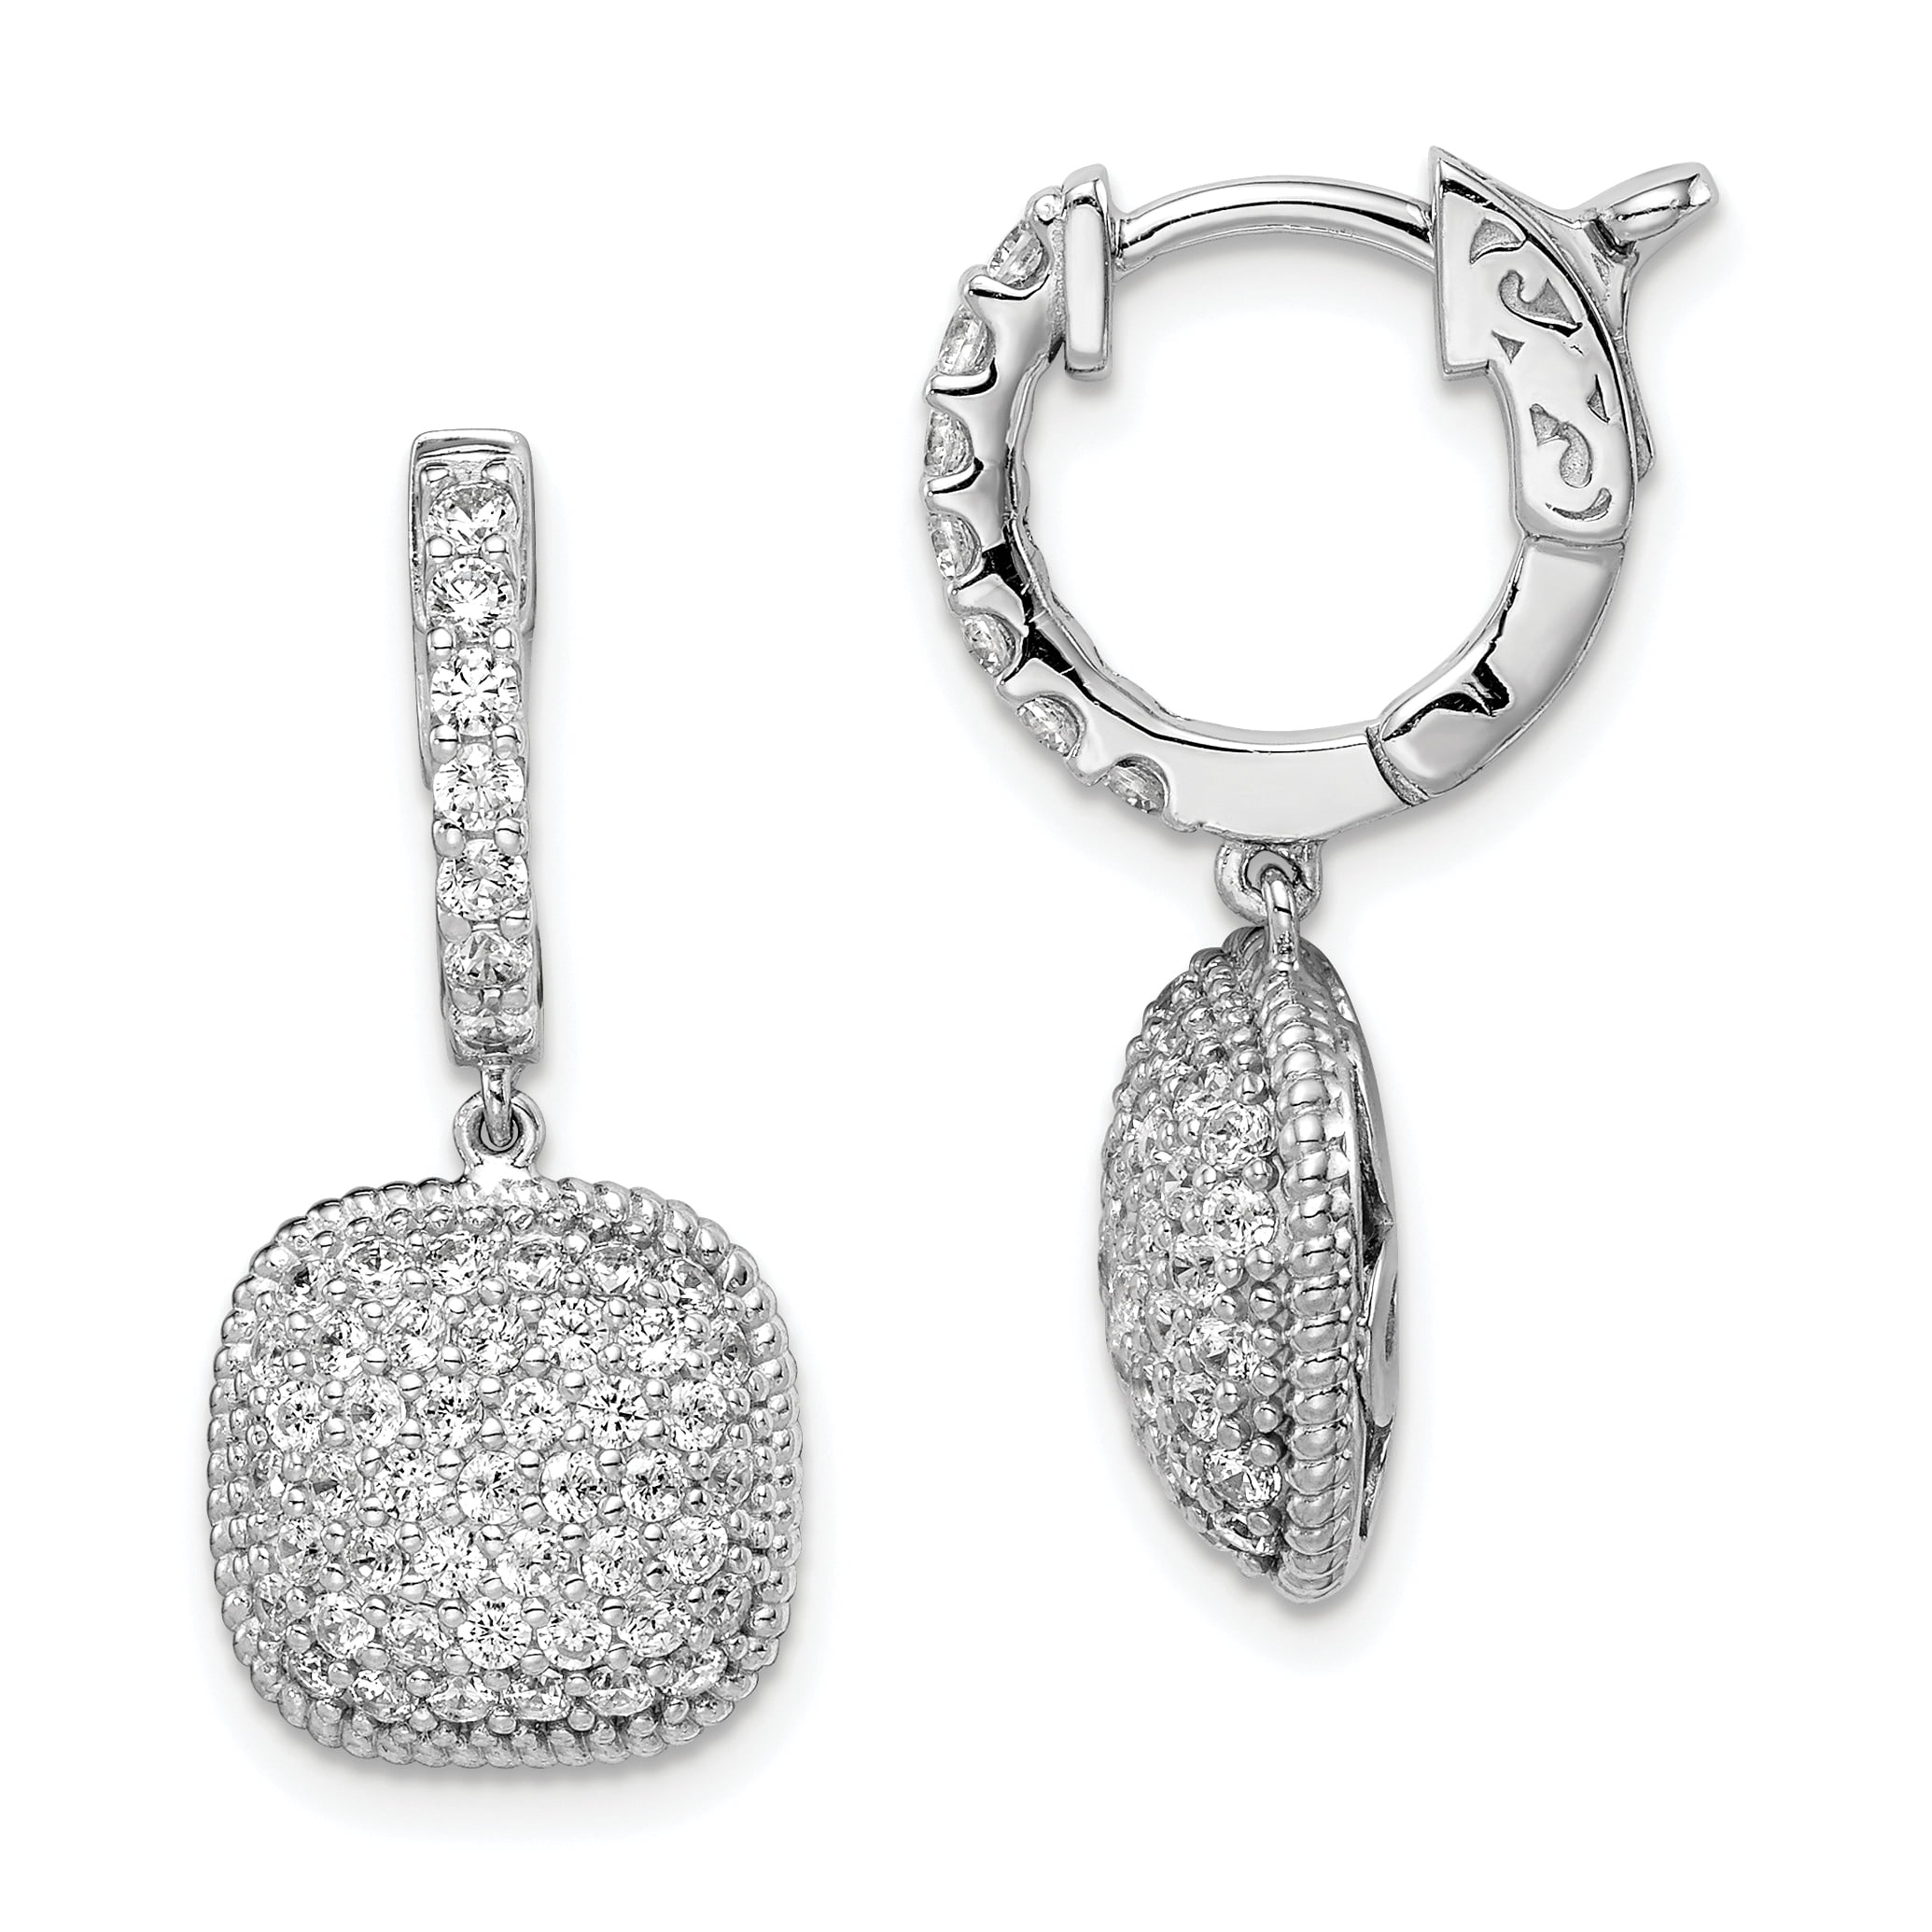 925 Sterling Silver Cubic Zirconia Cz Hinged Hoop Earrings Ear Hoops Set Fine Jewelry For Women Gifts For Her 